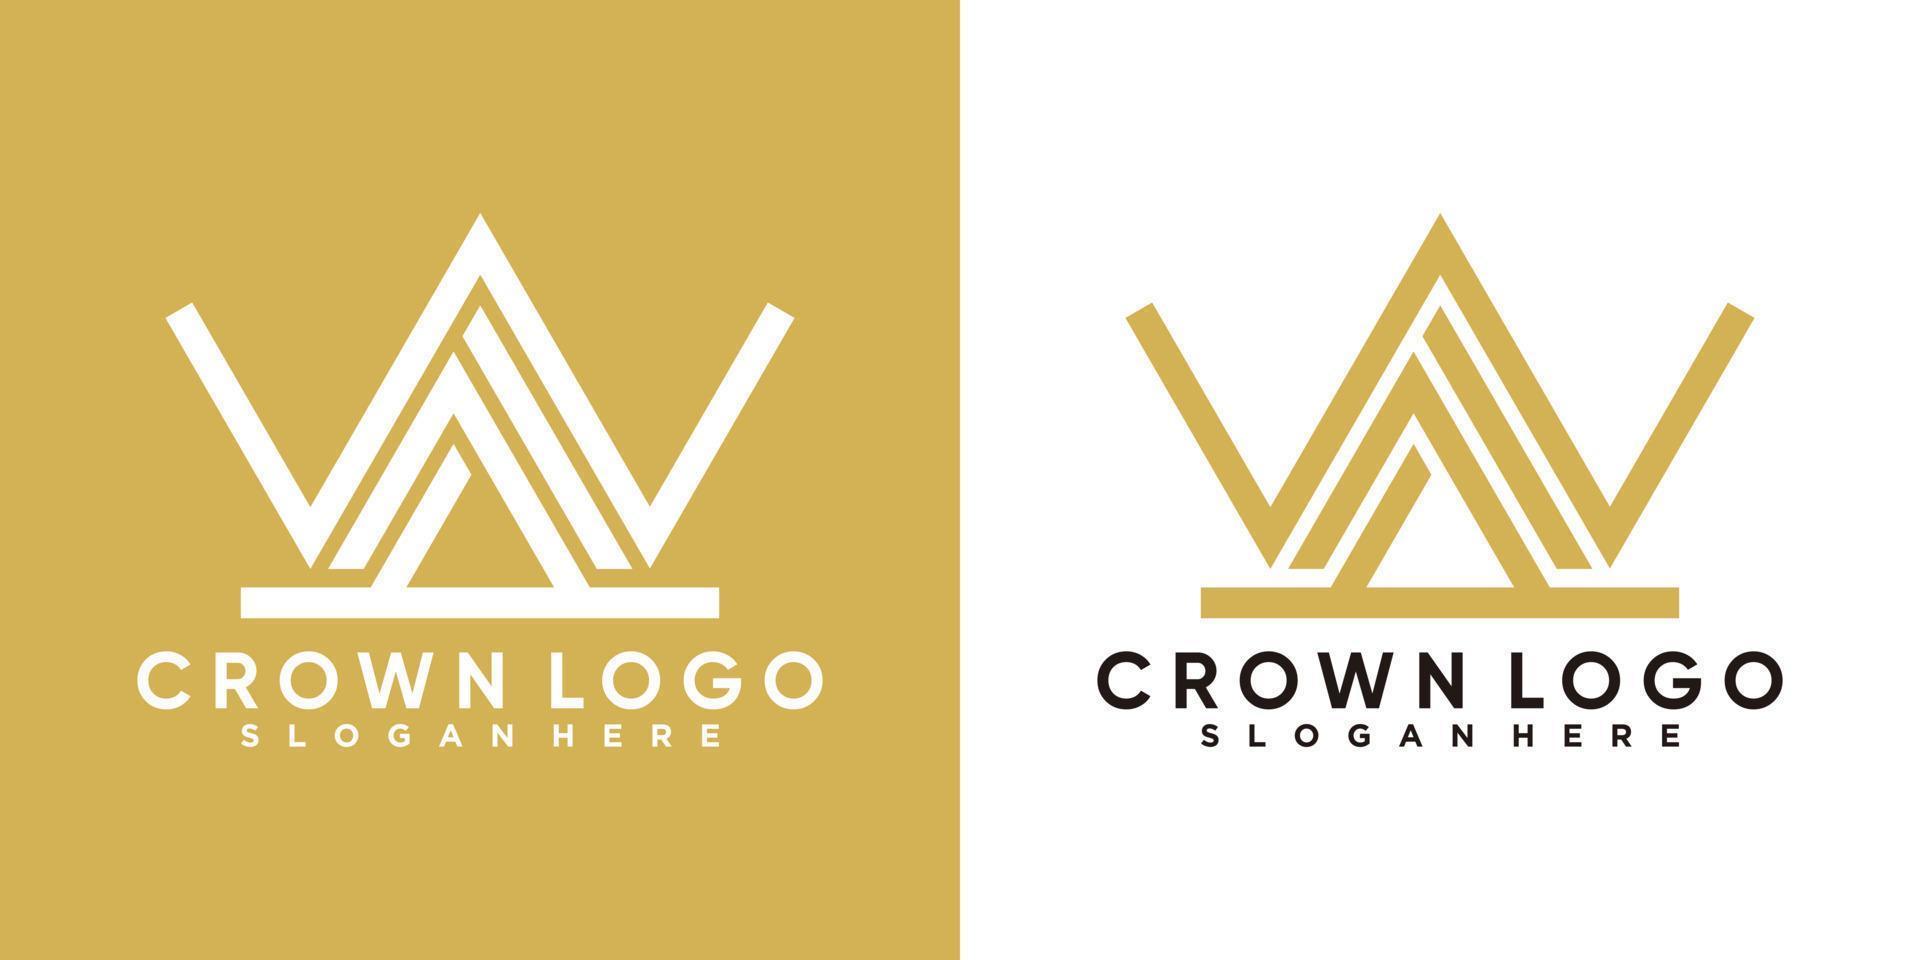 Crown logo design template with creative concept vector